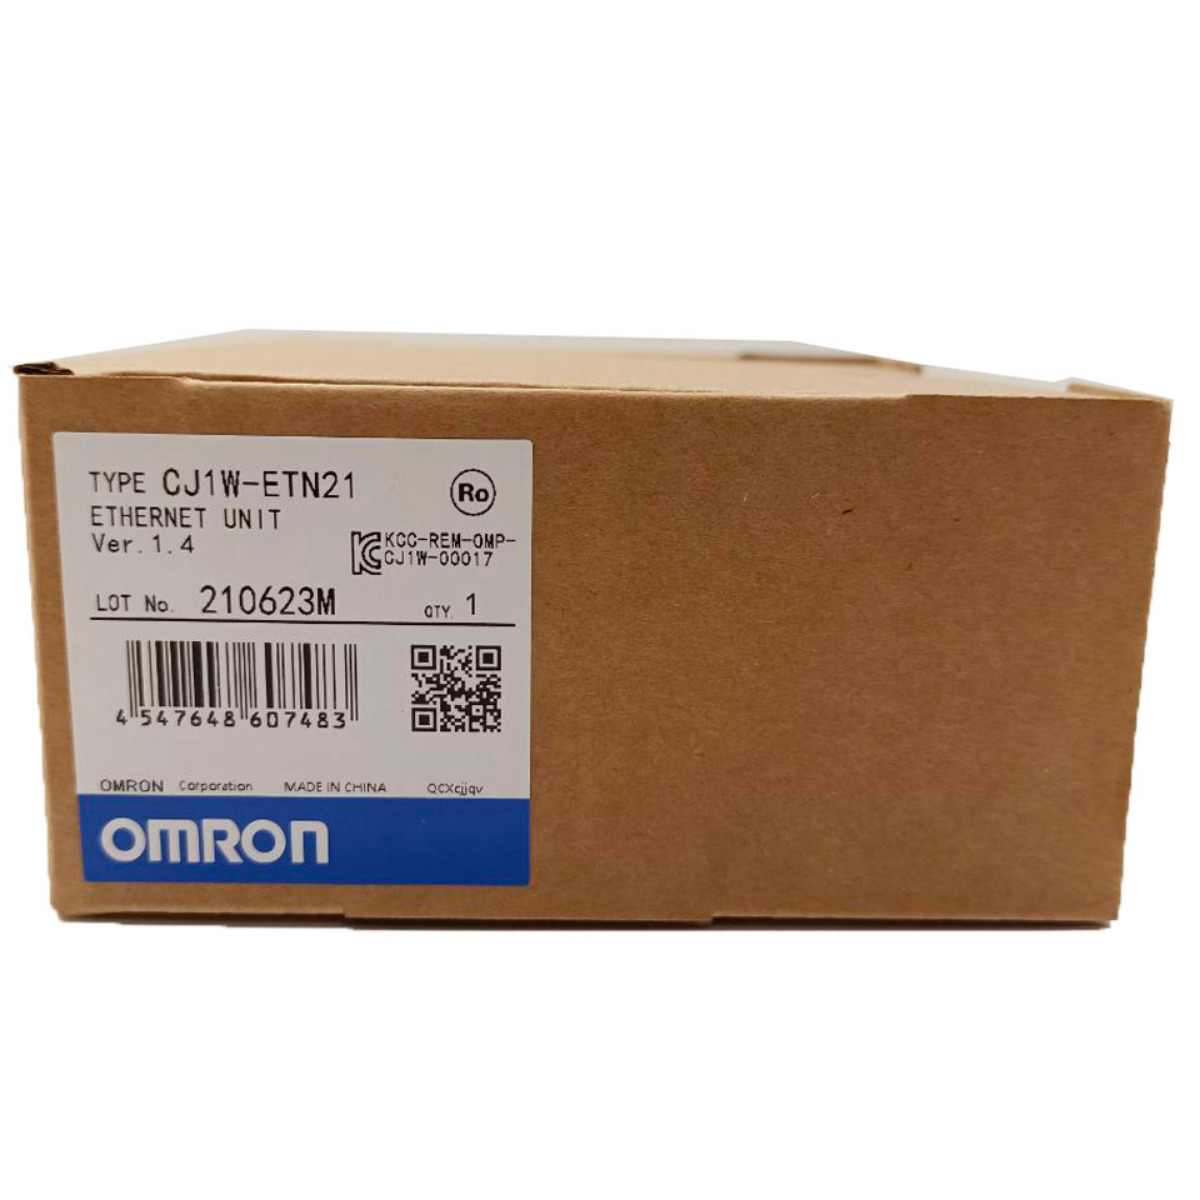 1PCS New Omron CJ1W-ETN21 CJ1WETN21 ETHERNET UNIT PROGRAMMABLE CONTROLLER